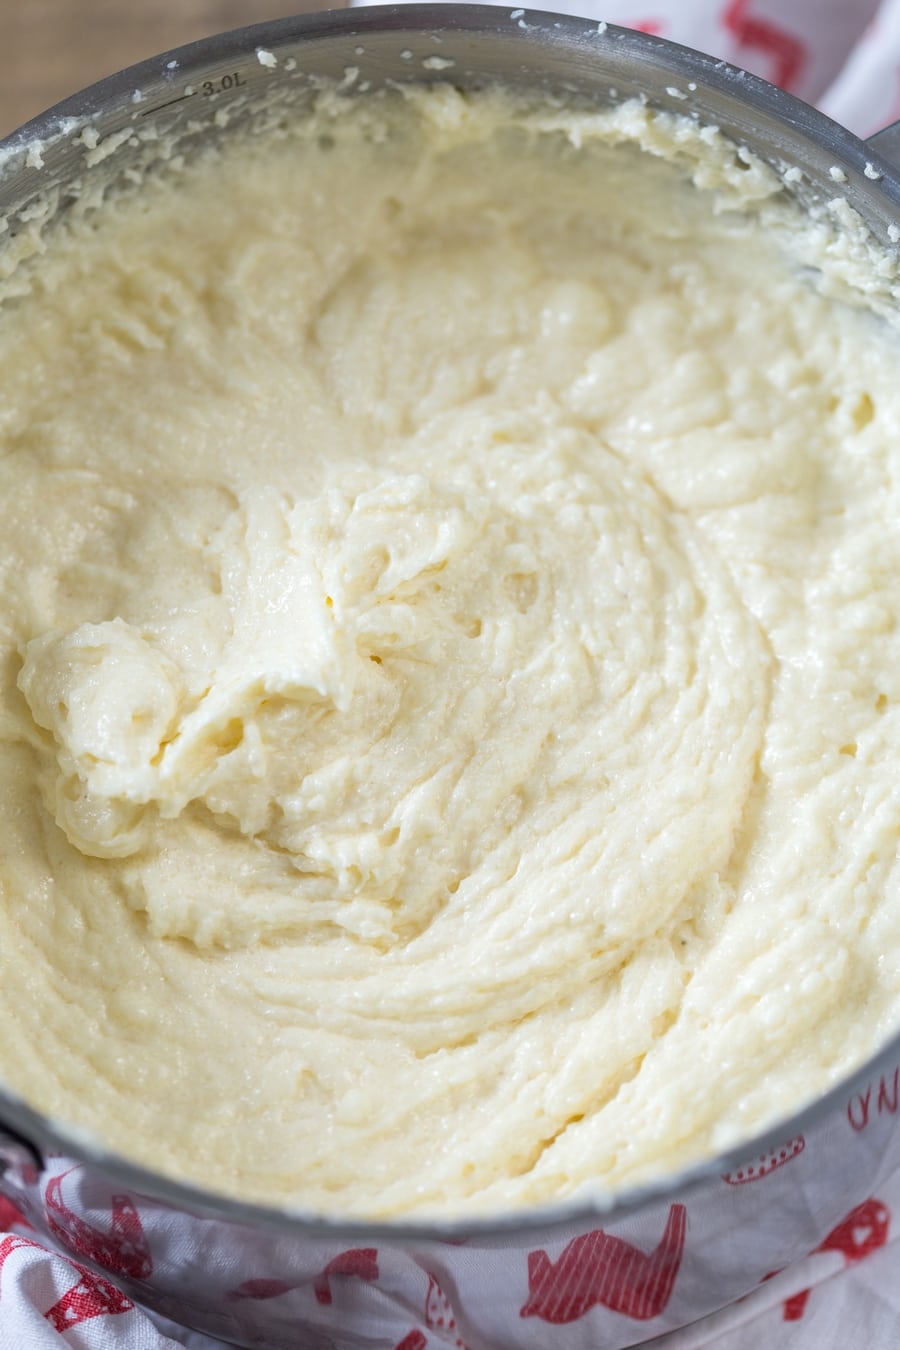 Semolina mixed with buttercream to make semolina cream.